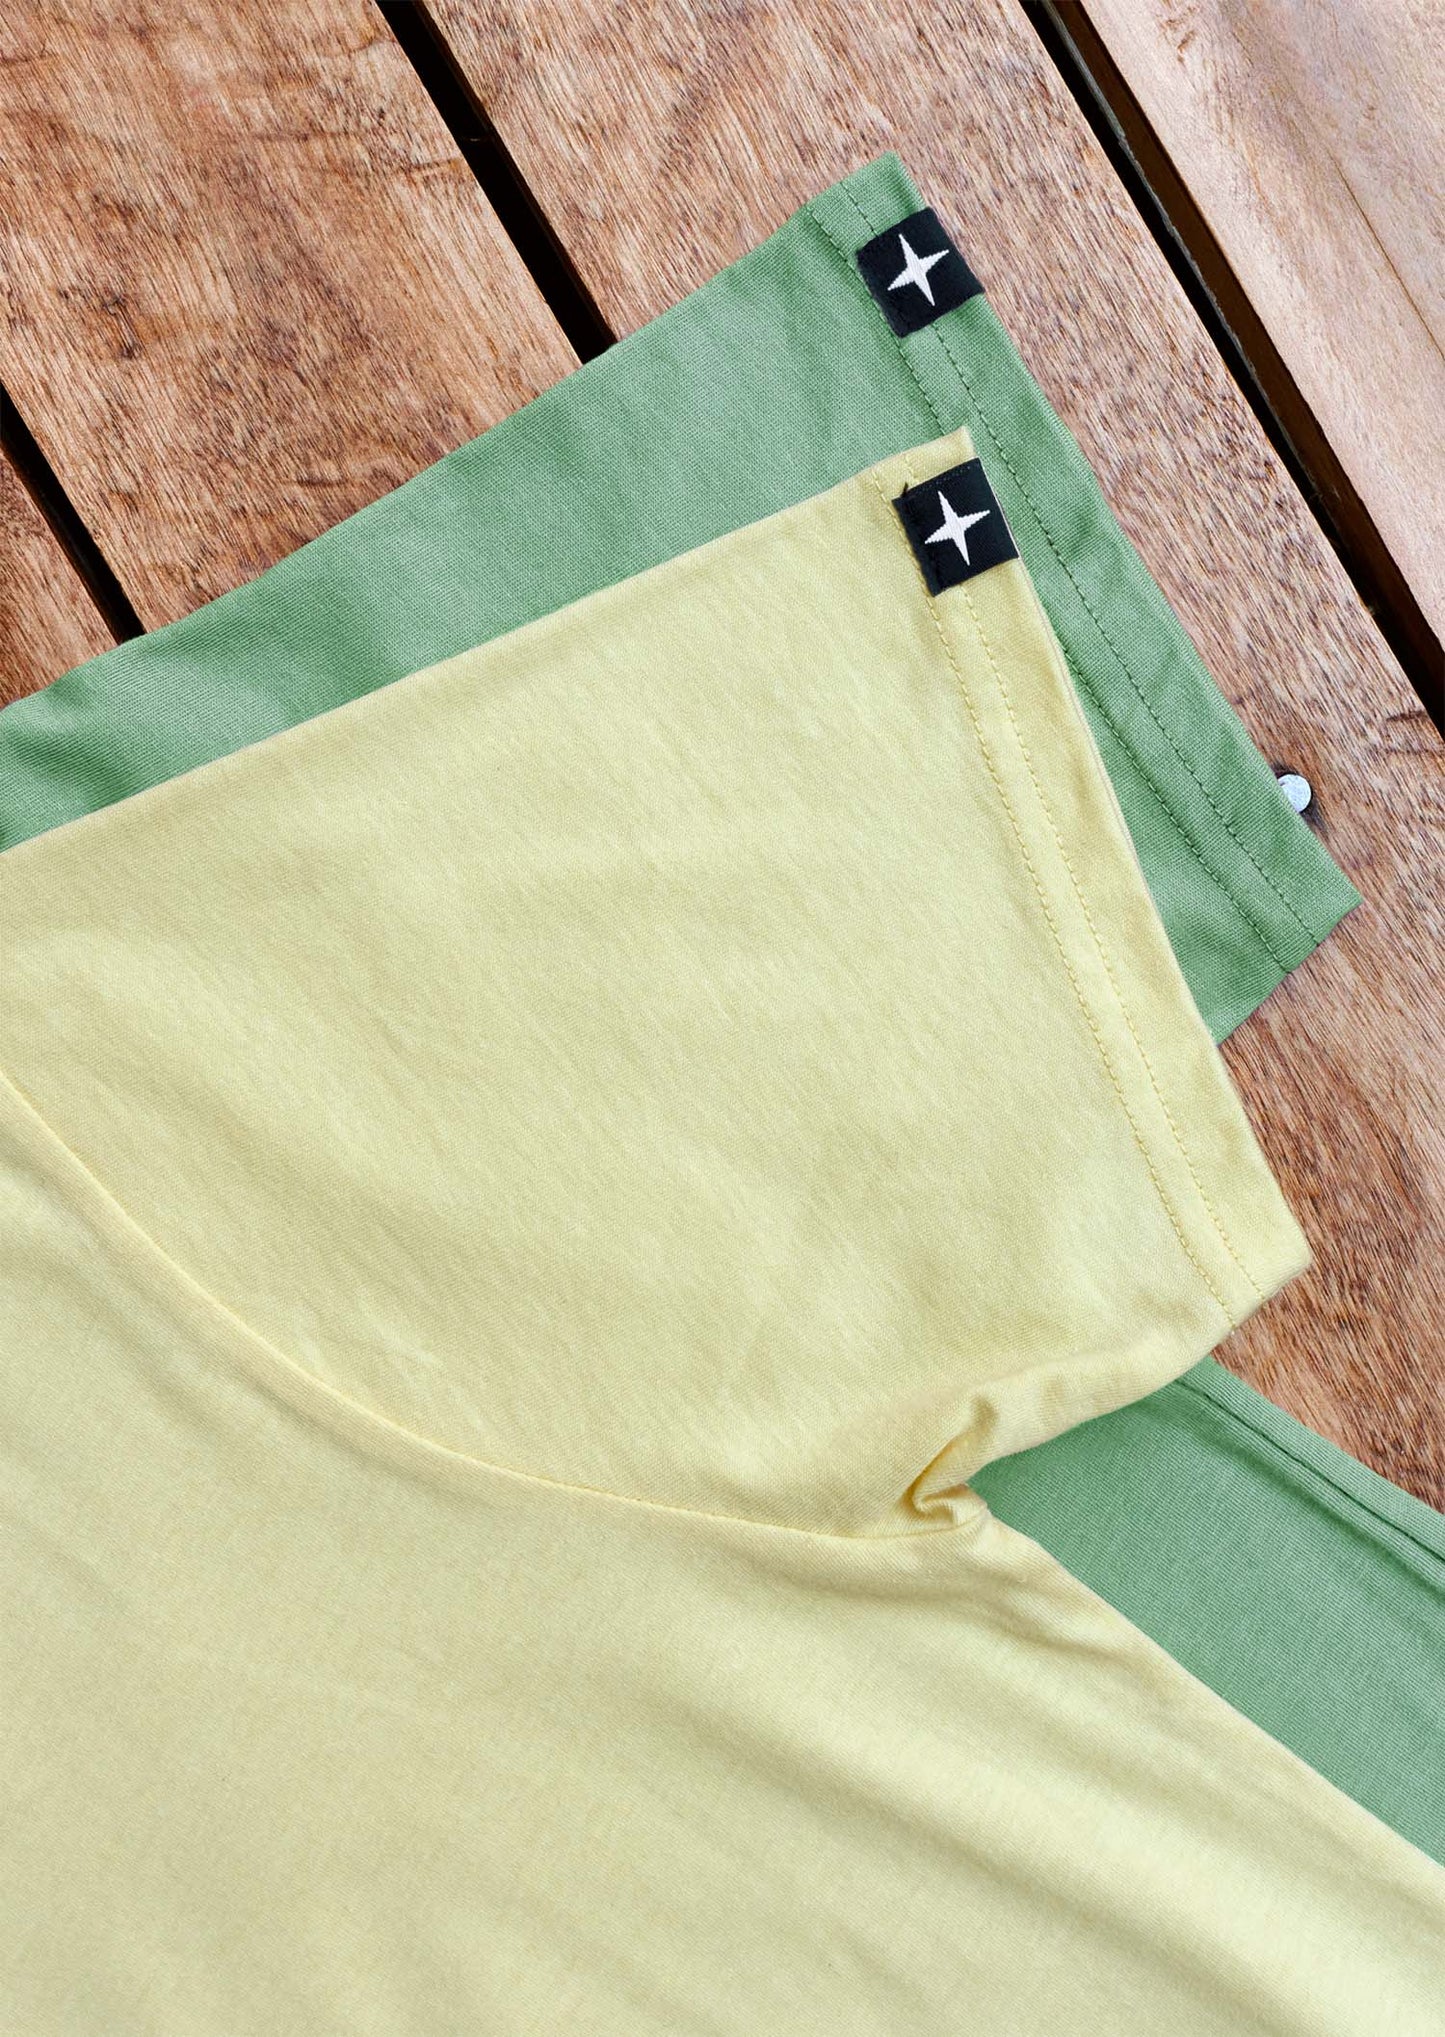 2 t-shirts lichen green - light yellow